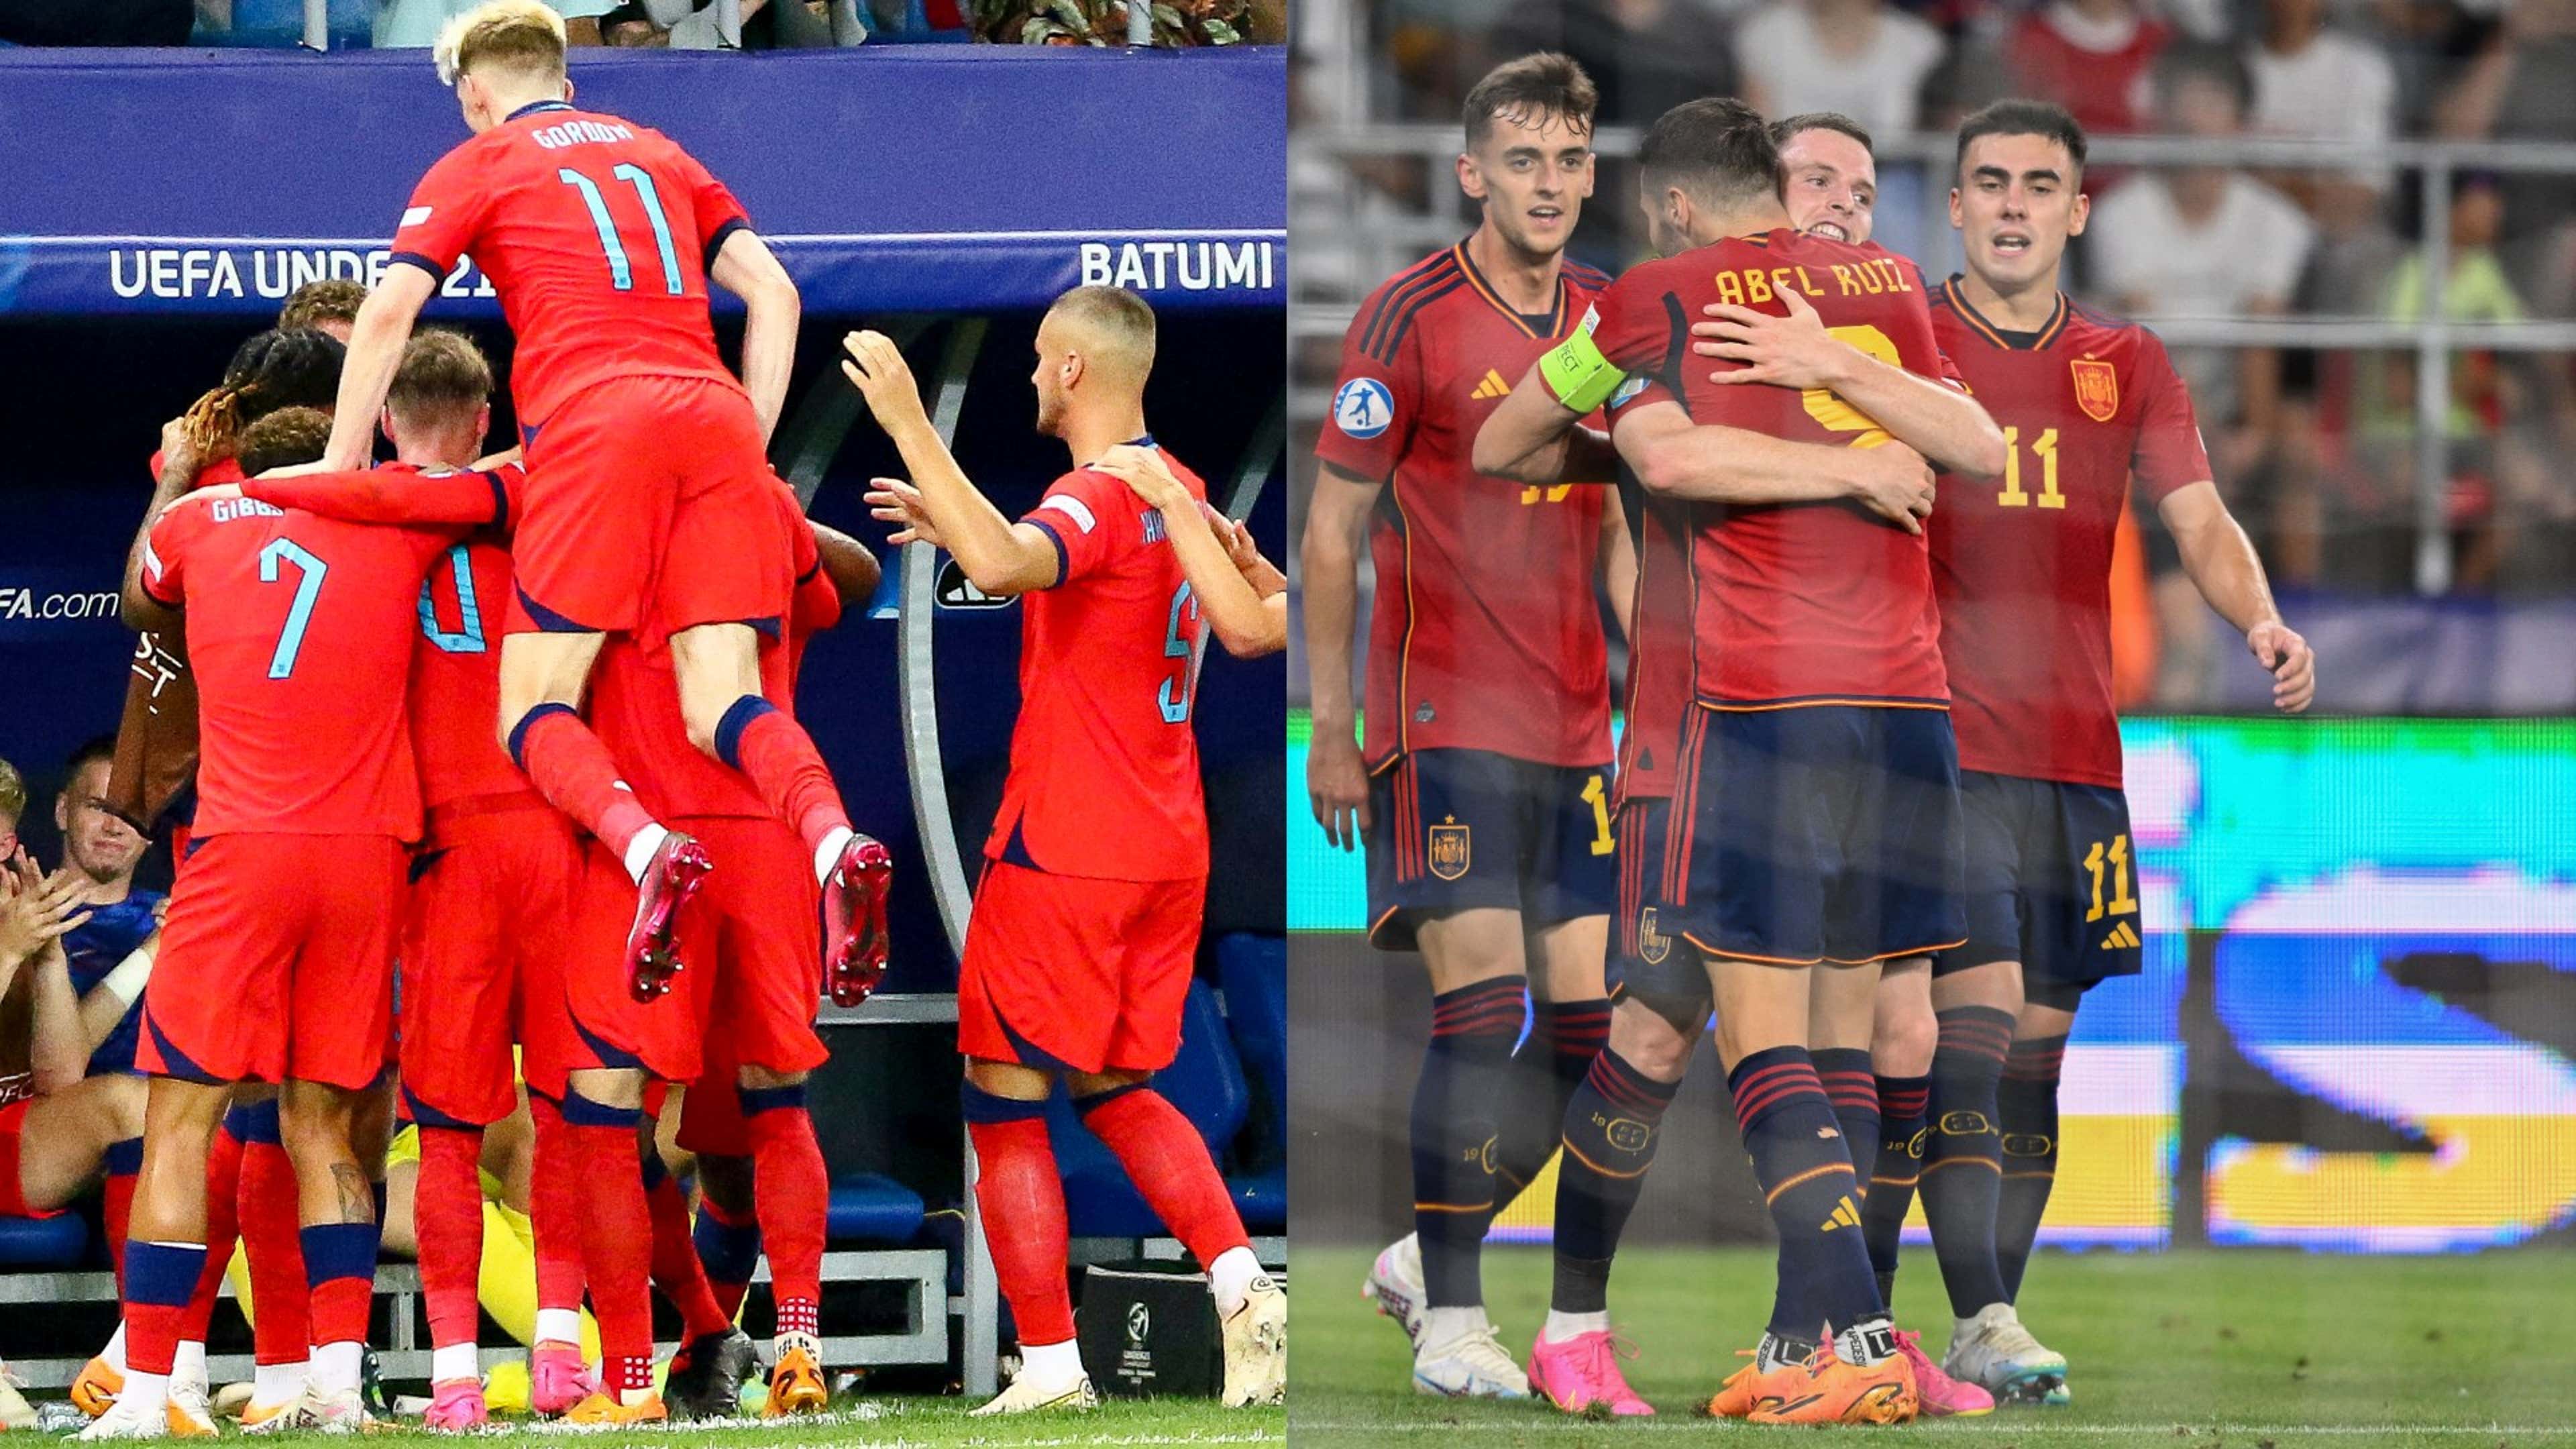 Spain v England, Final, Augmented Feed Live Stream